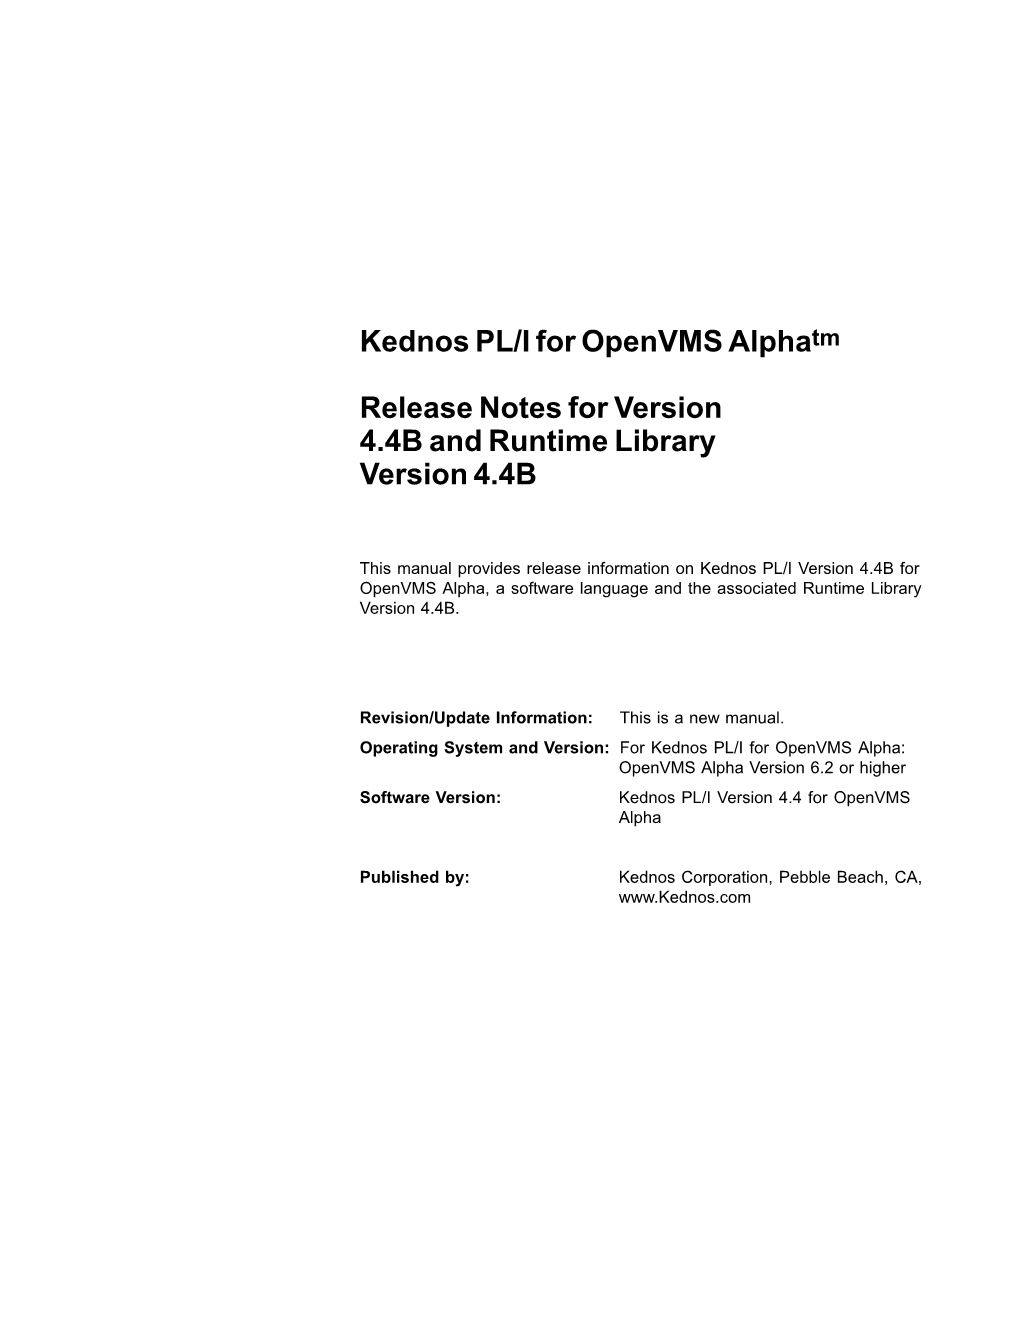 Kednos PL/I for Openvms Alphatm Release Notes for Version 4.4B And